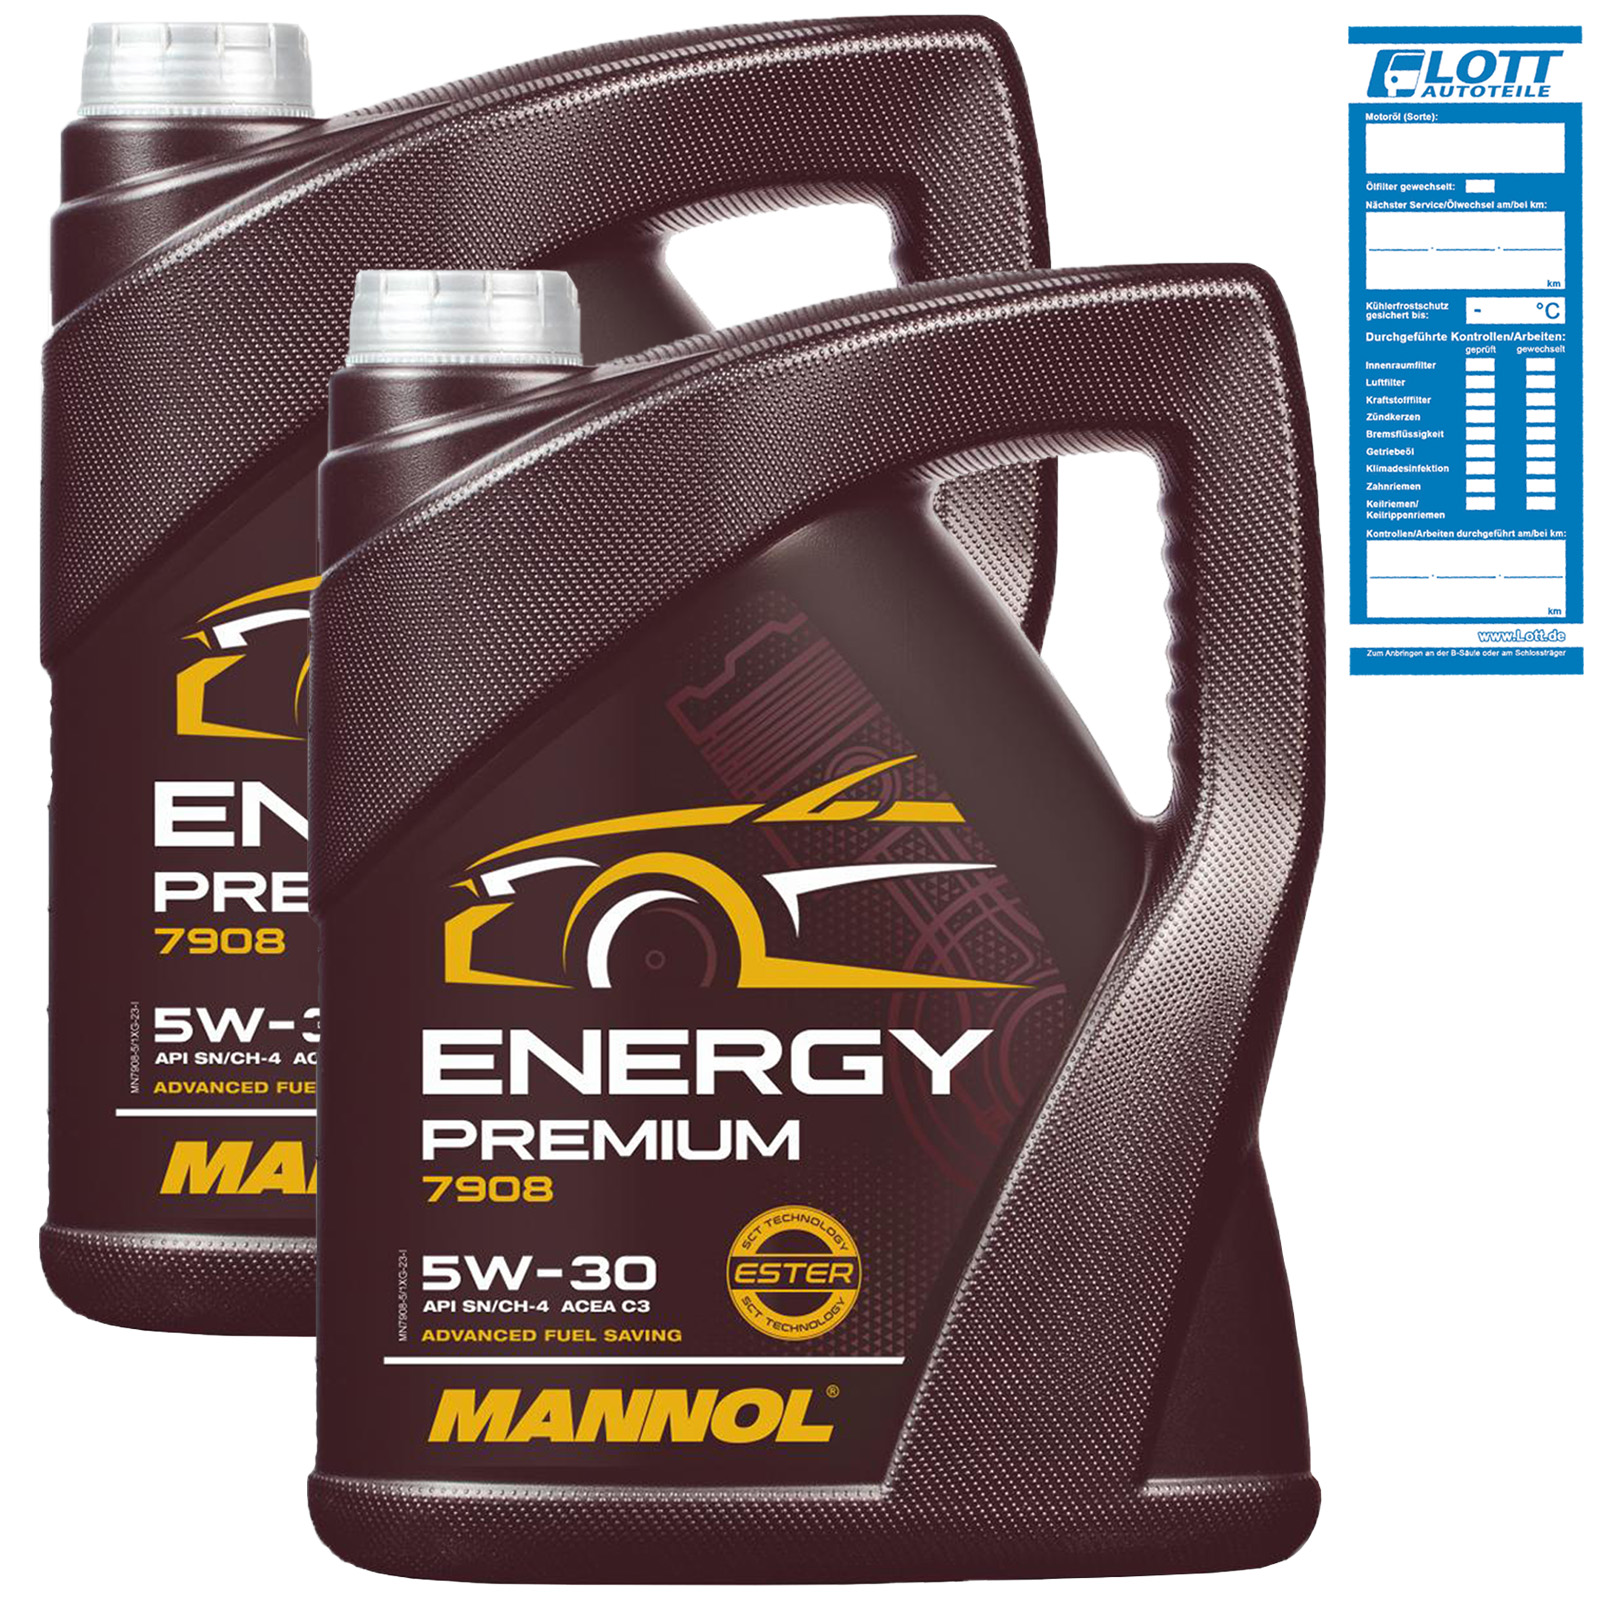 2x 5L Mannol Energy Premium 5W-30 Motoröl MN7908-5